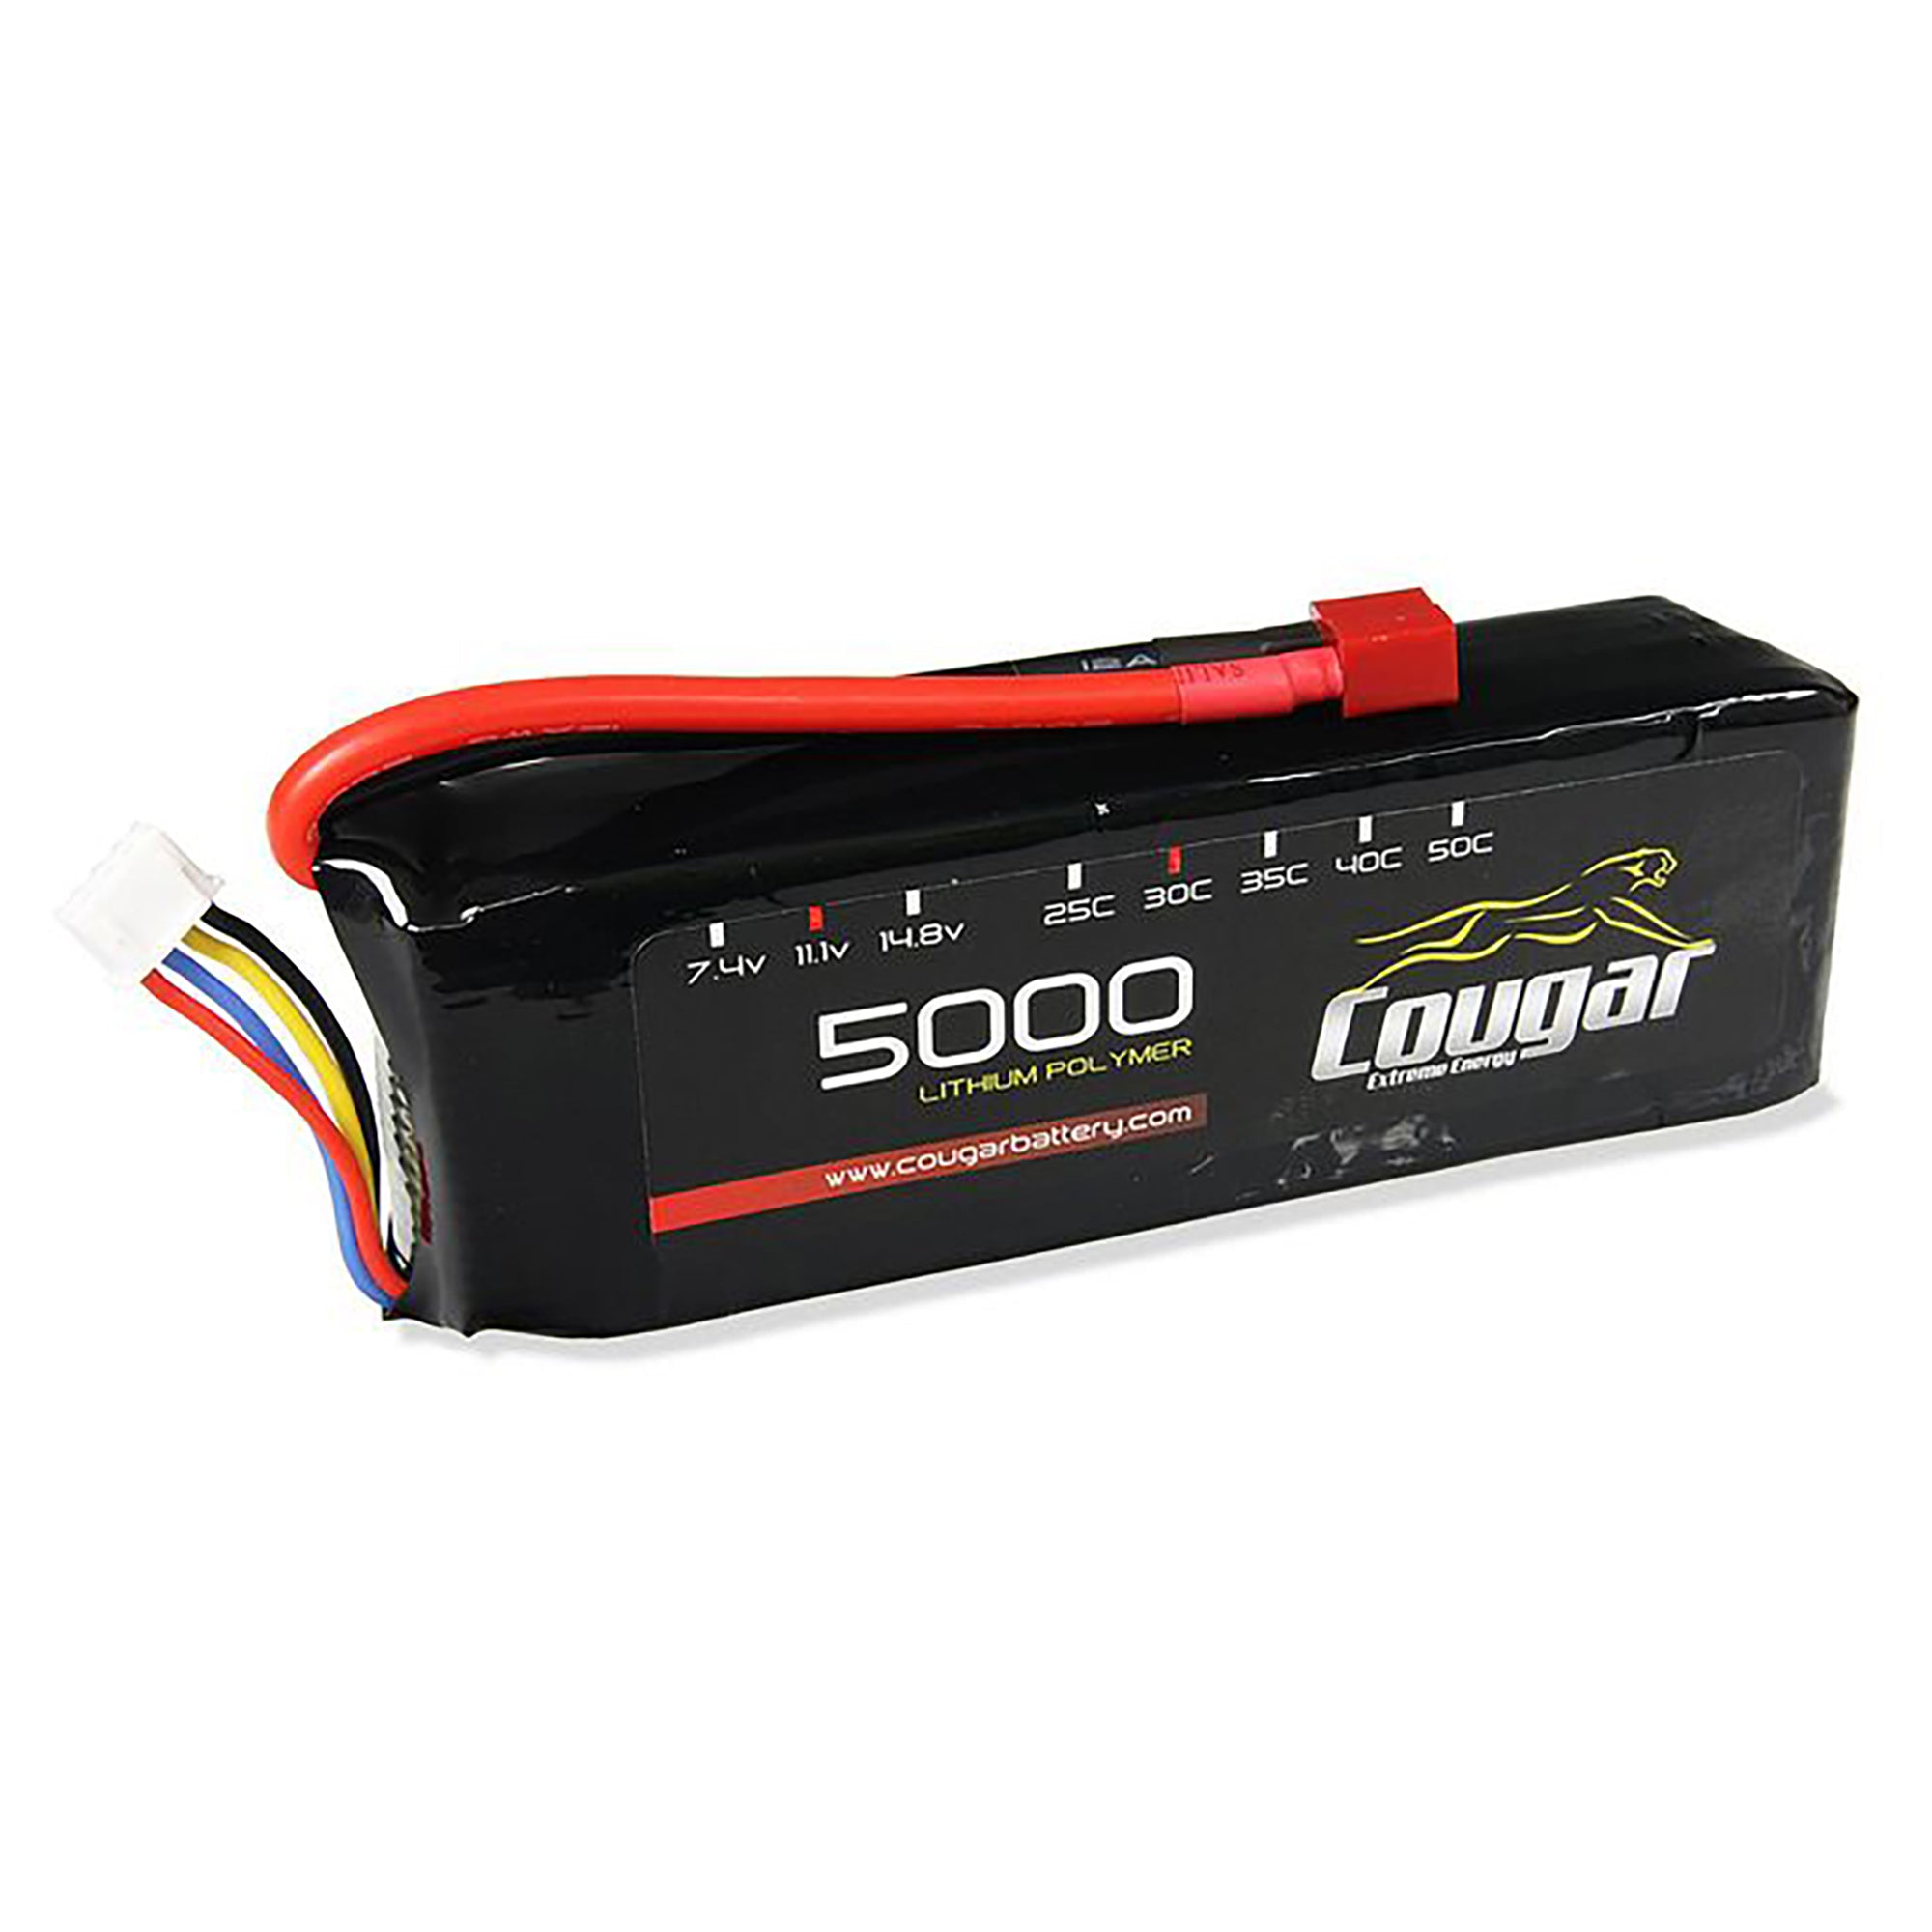 Cougar 5500mAh 11.1v 3S 35C Soft Case LiPo Battery